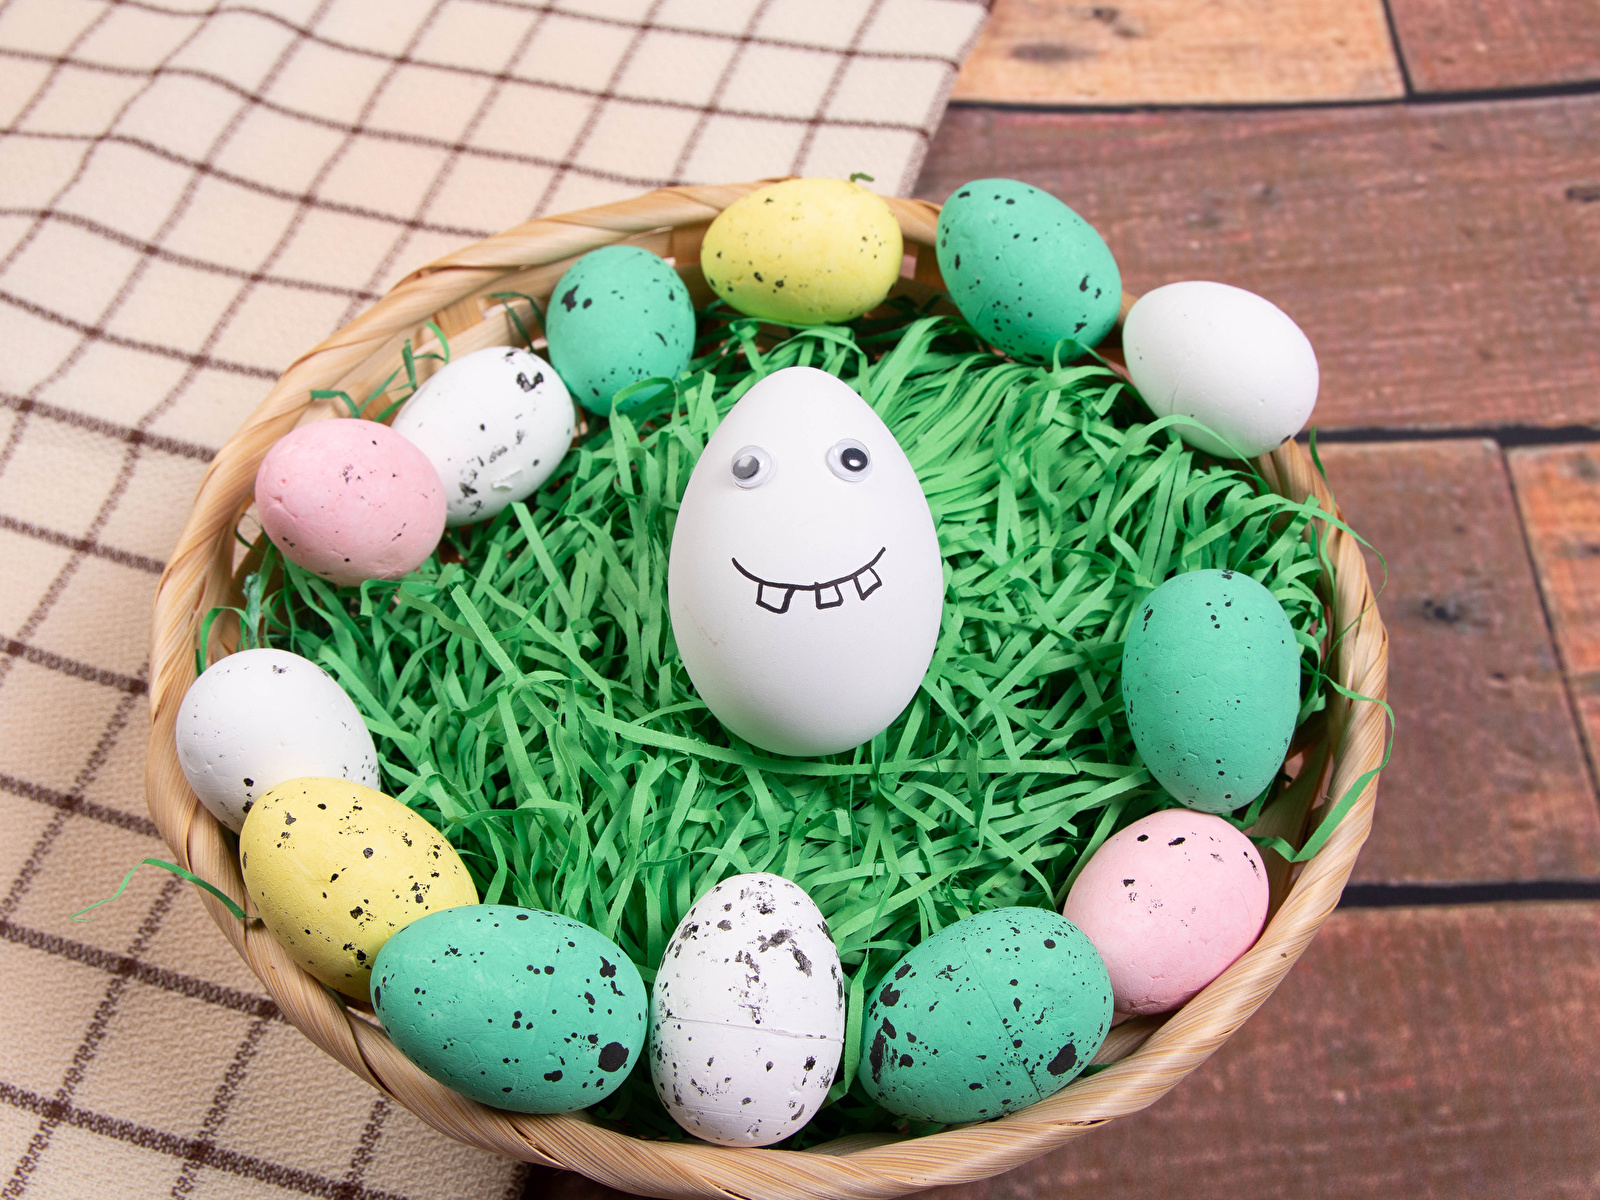 Картинка Пасха яиц Корзинка траве Продукты питания 1600x1200 яйцо Яйца яйцами Корзина корзины Еда Пища Трава